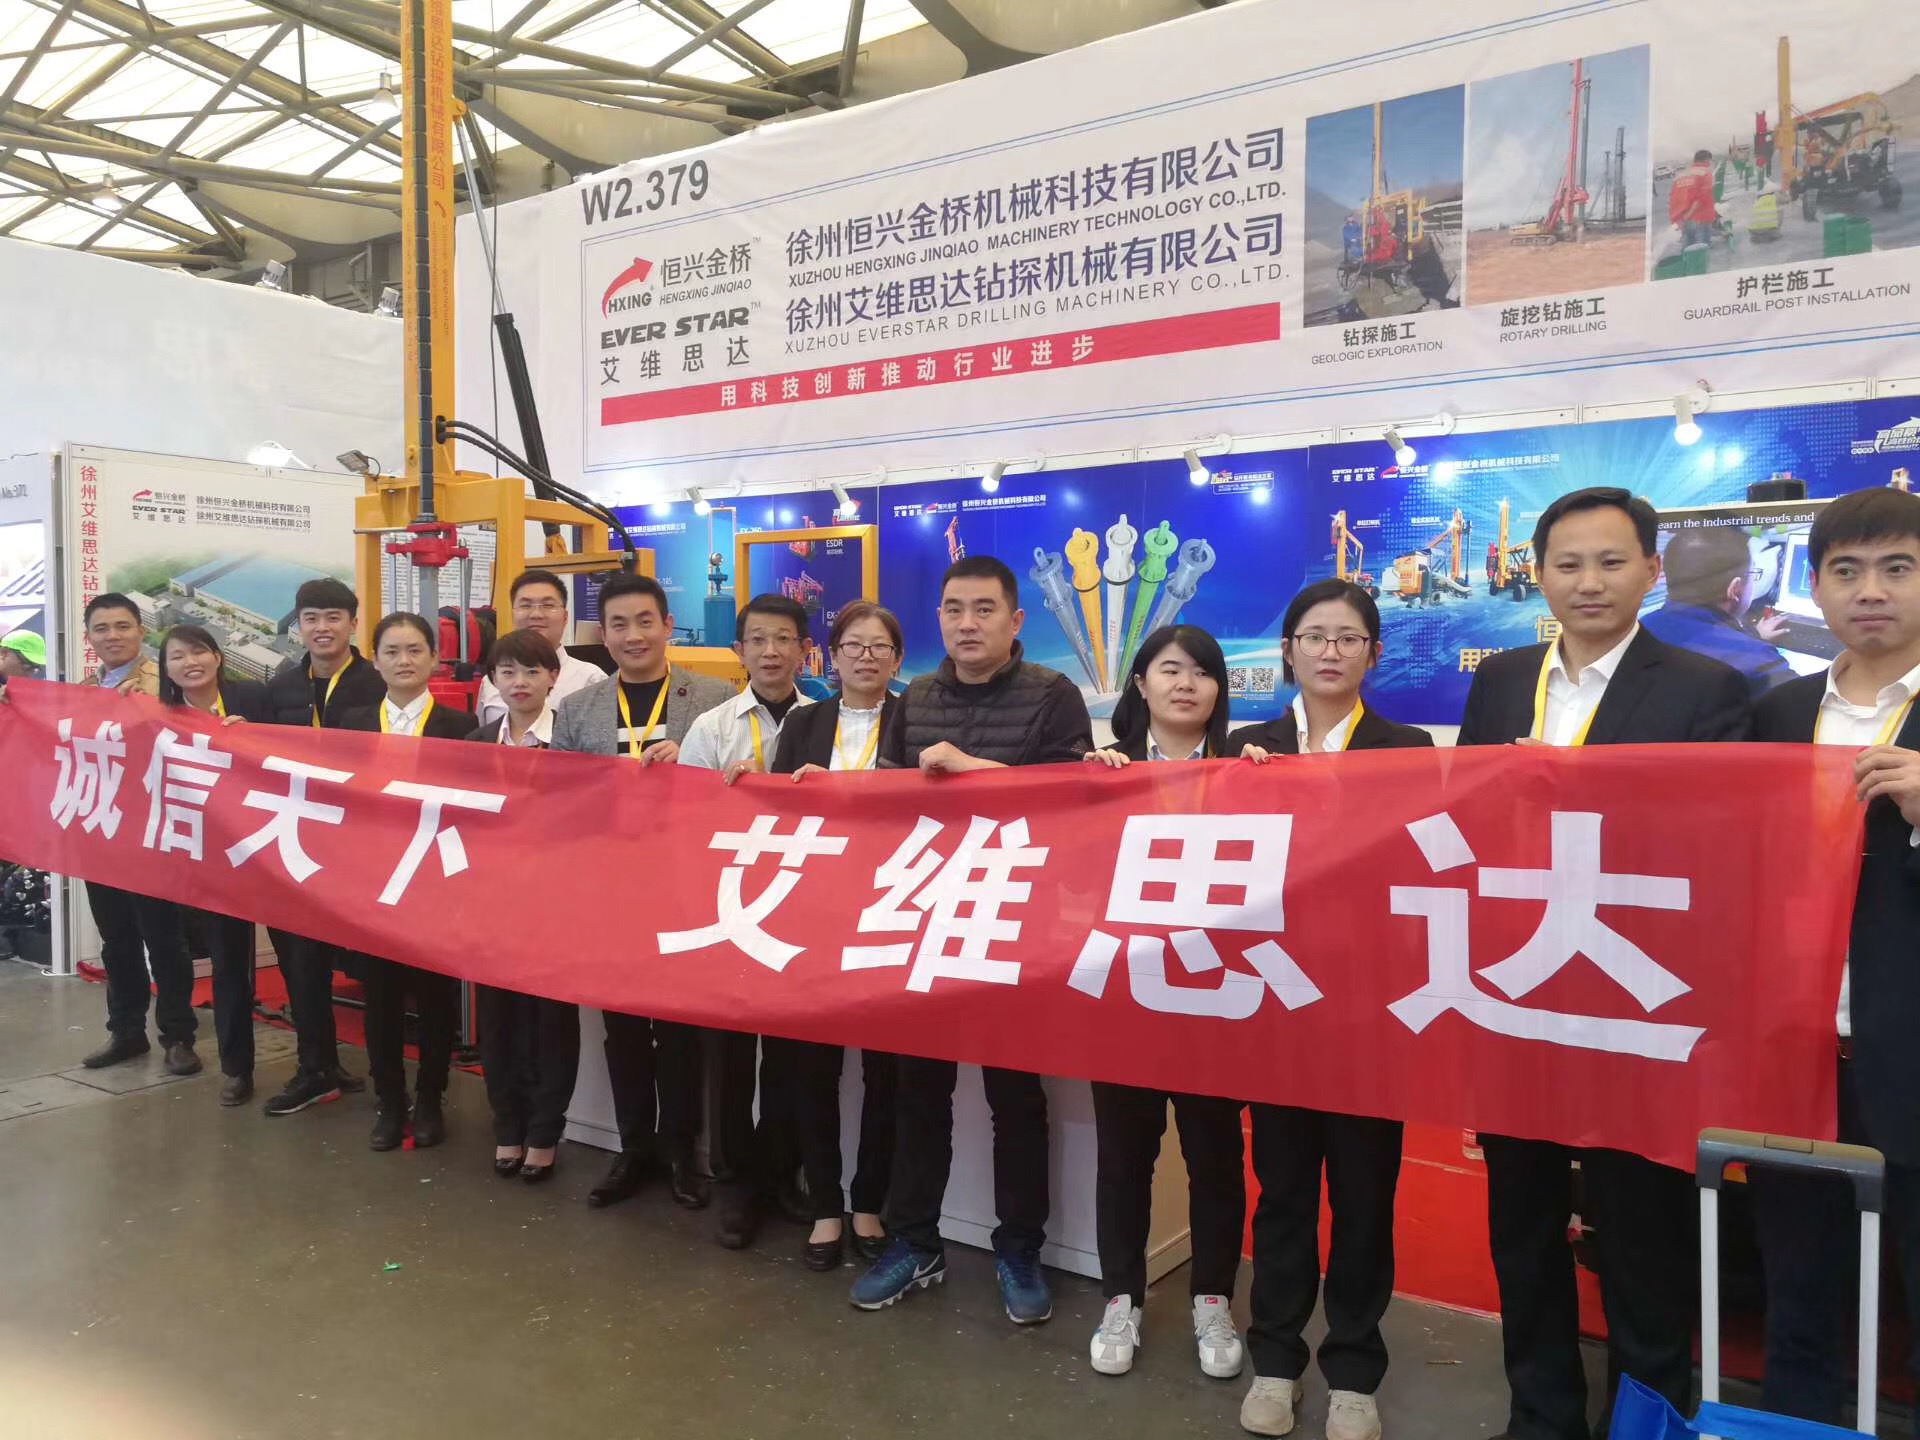 EVERSTAR Group Attend Bauma Shanghai Exhibition 2018